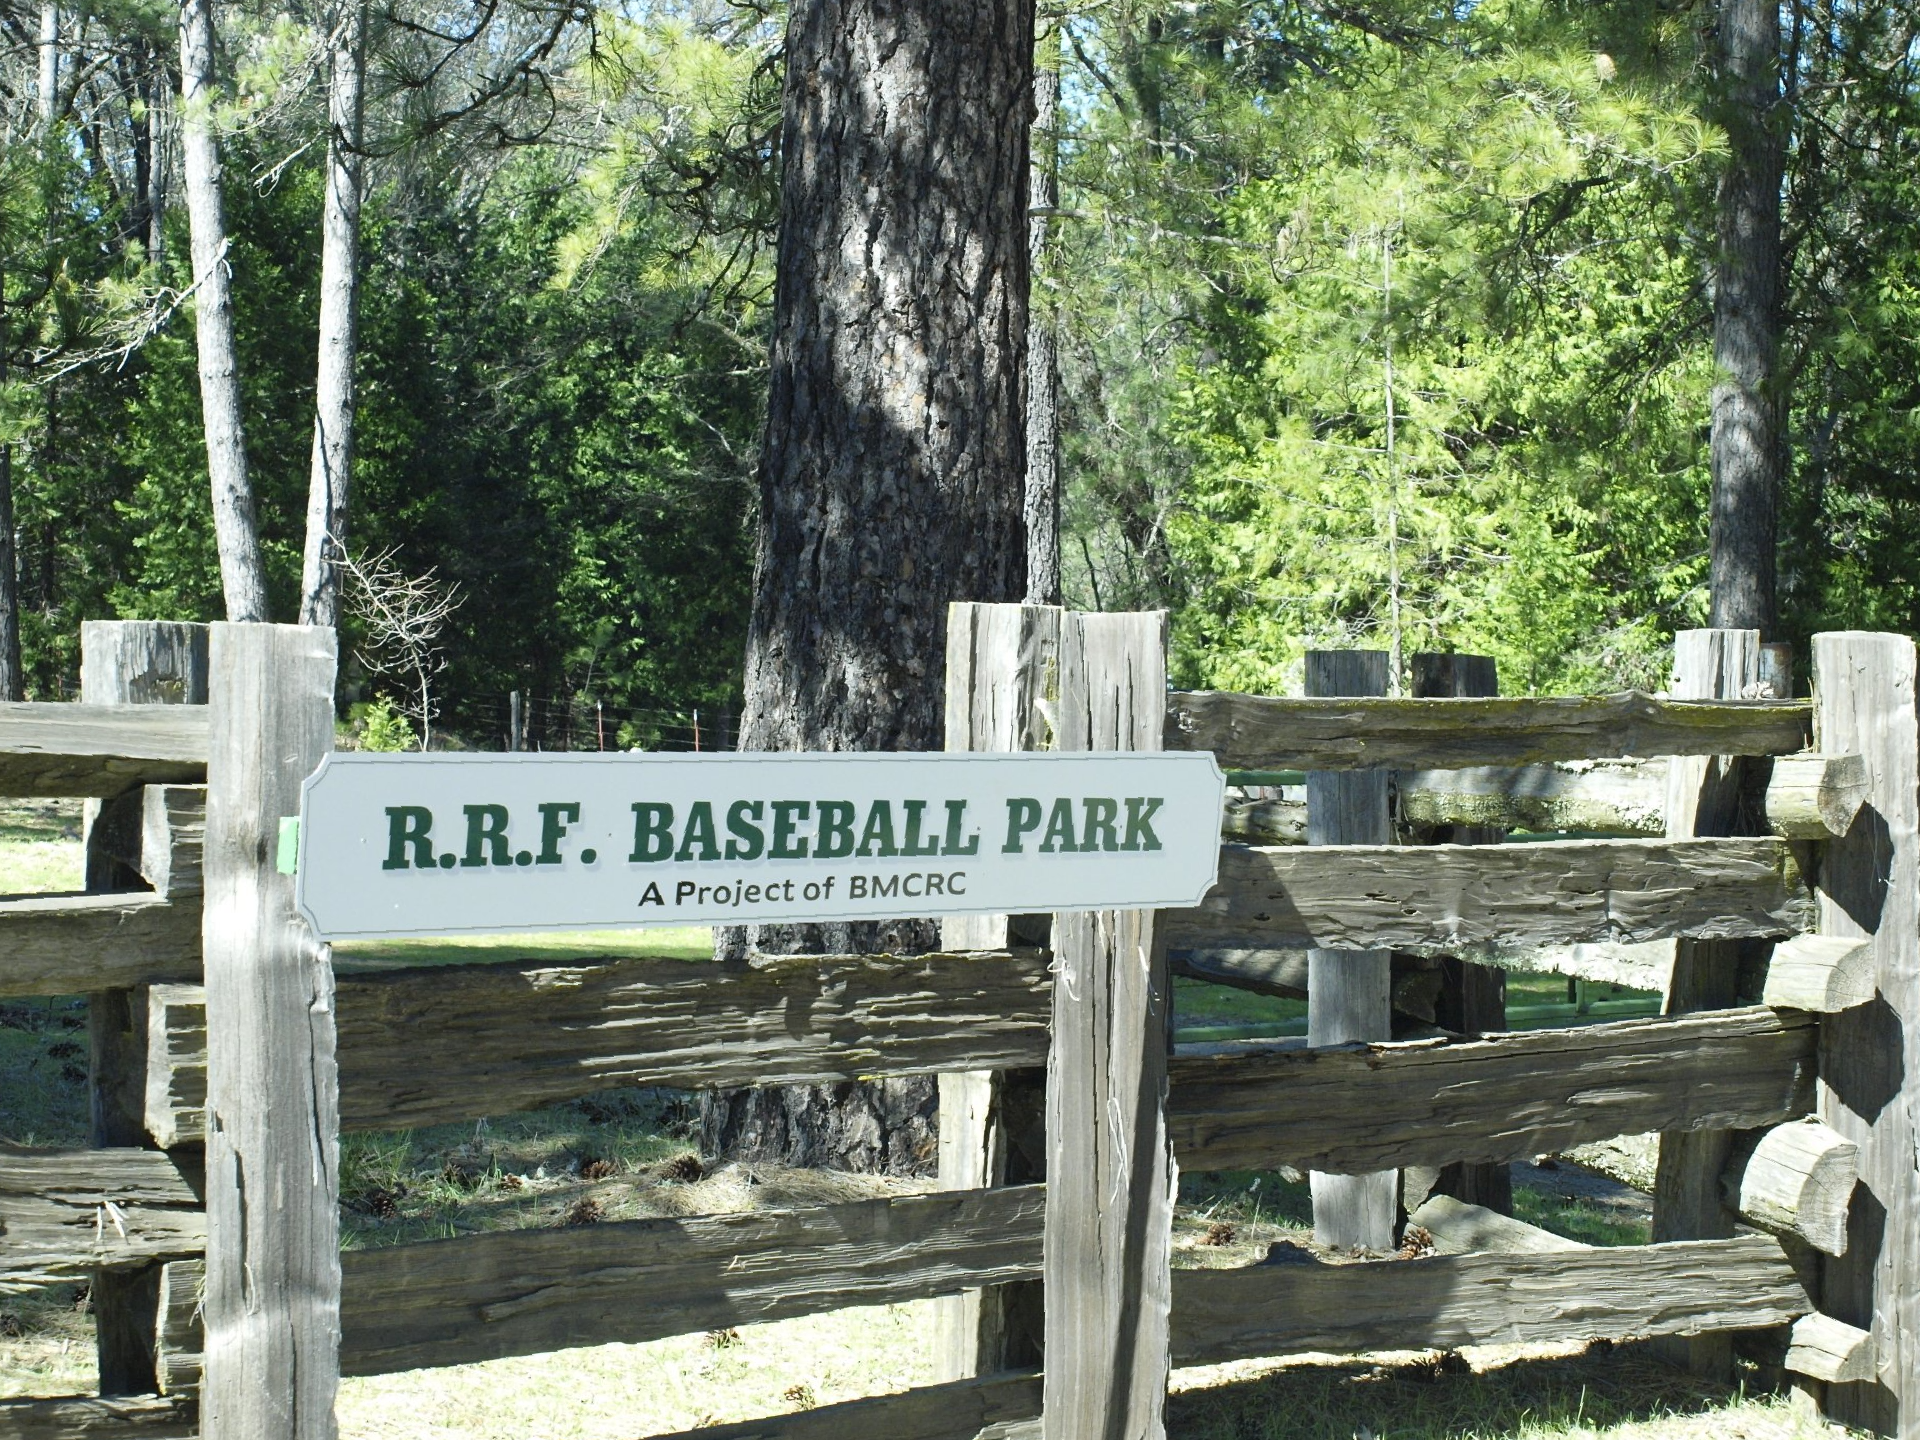 BMCRC Project - Rail Road Flats Baseball Park